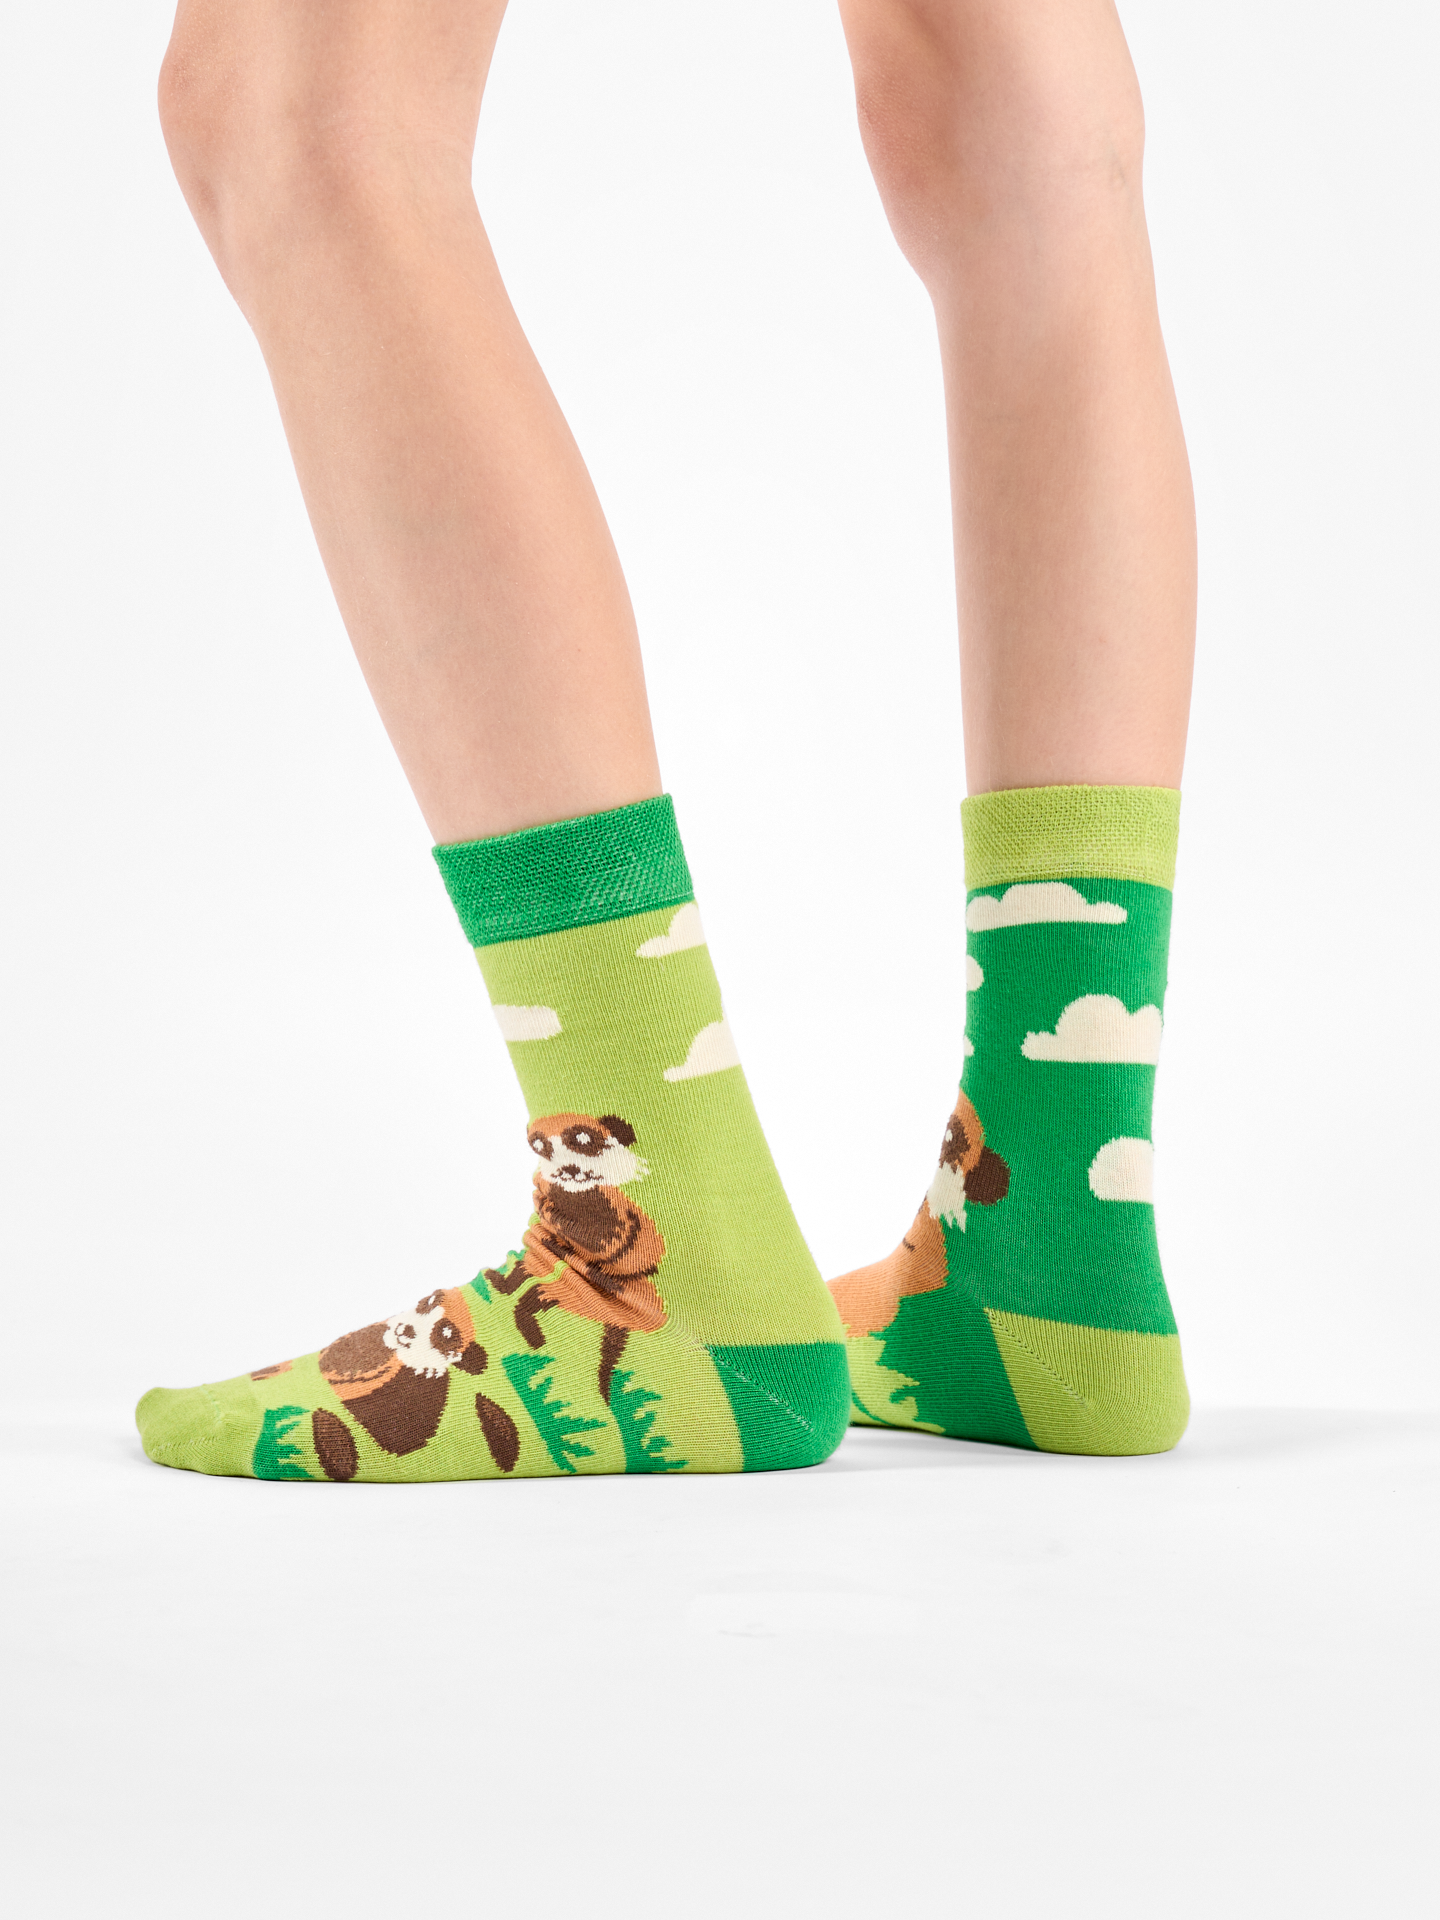 Kids' Socks Meerkats